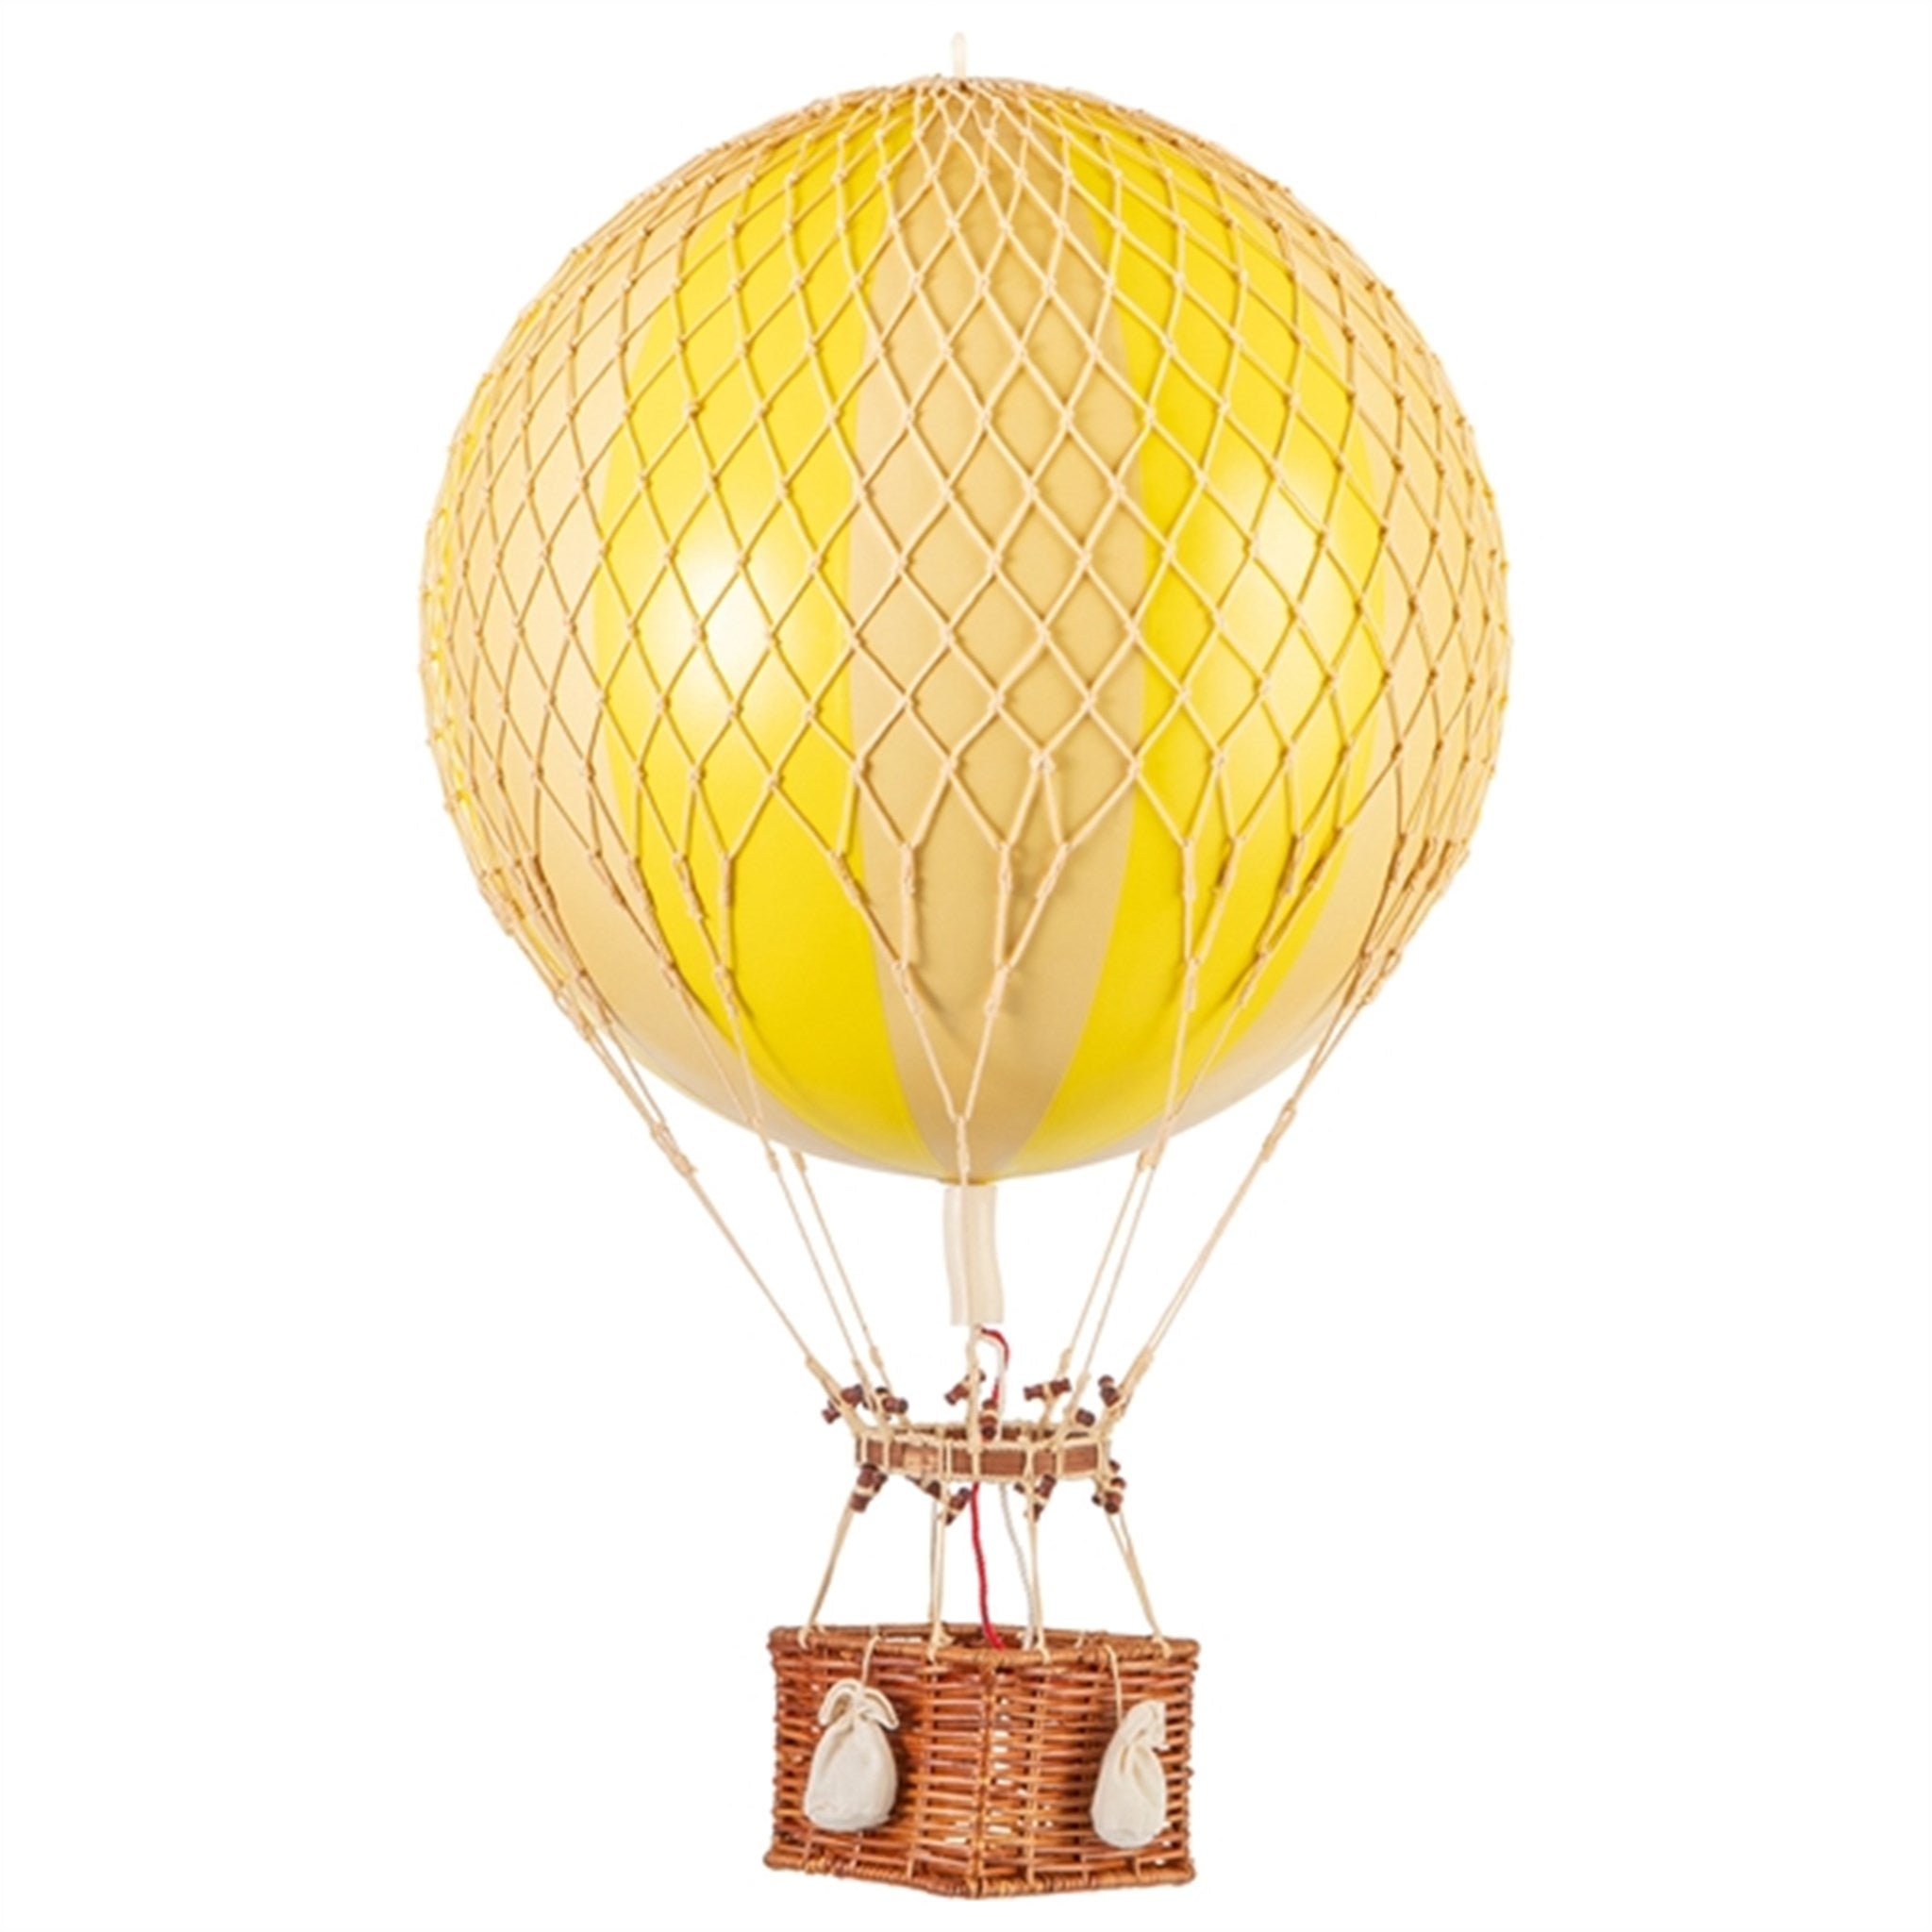 Authentic Models Balloon Double Yellow 32 cm